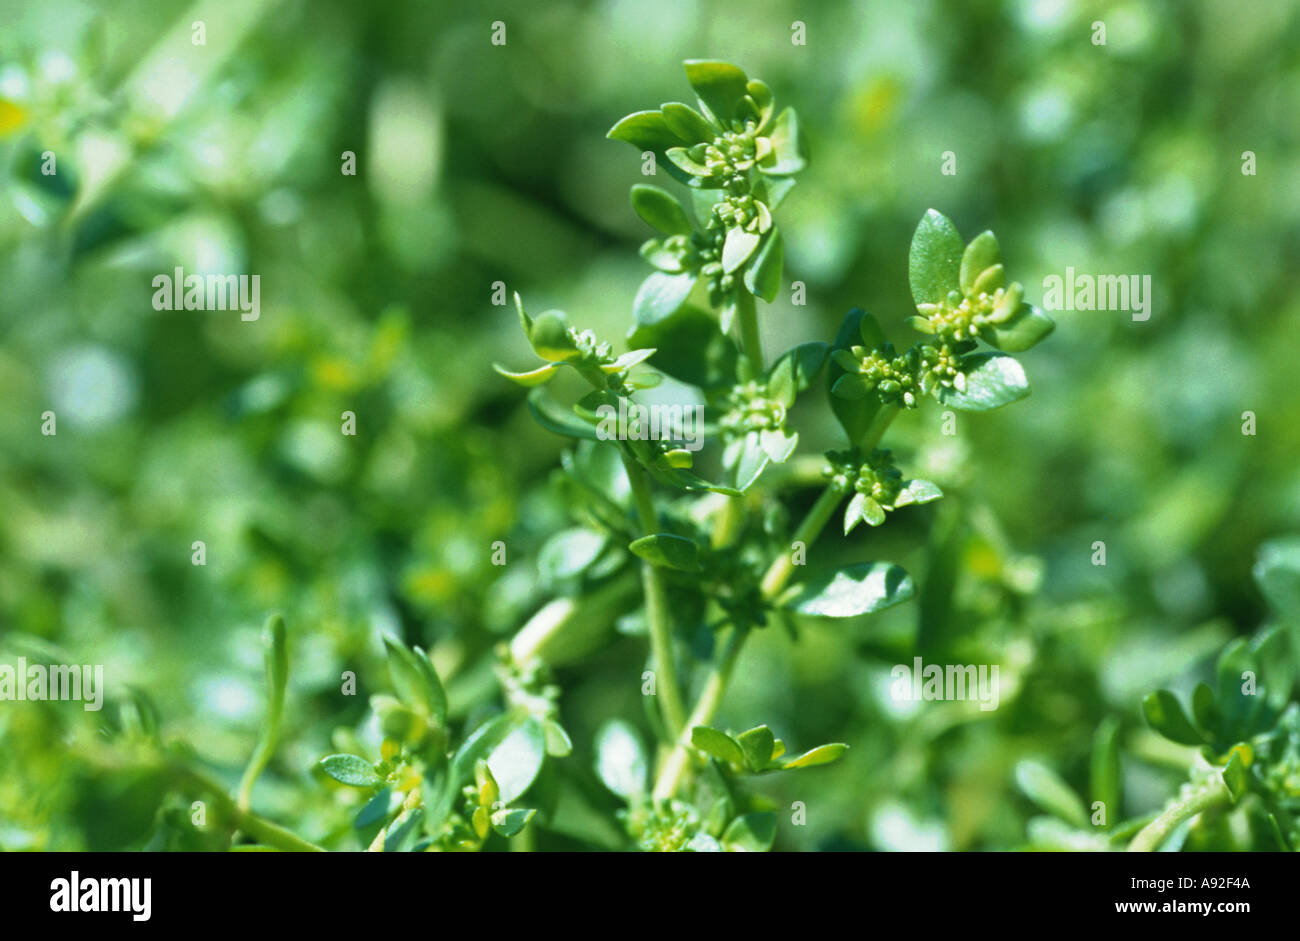 Herniaria glabra Rupture wort medicinal plant Stock Photo